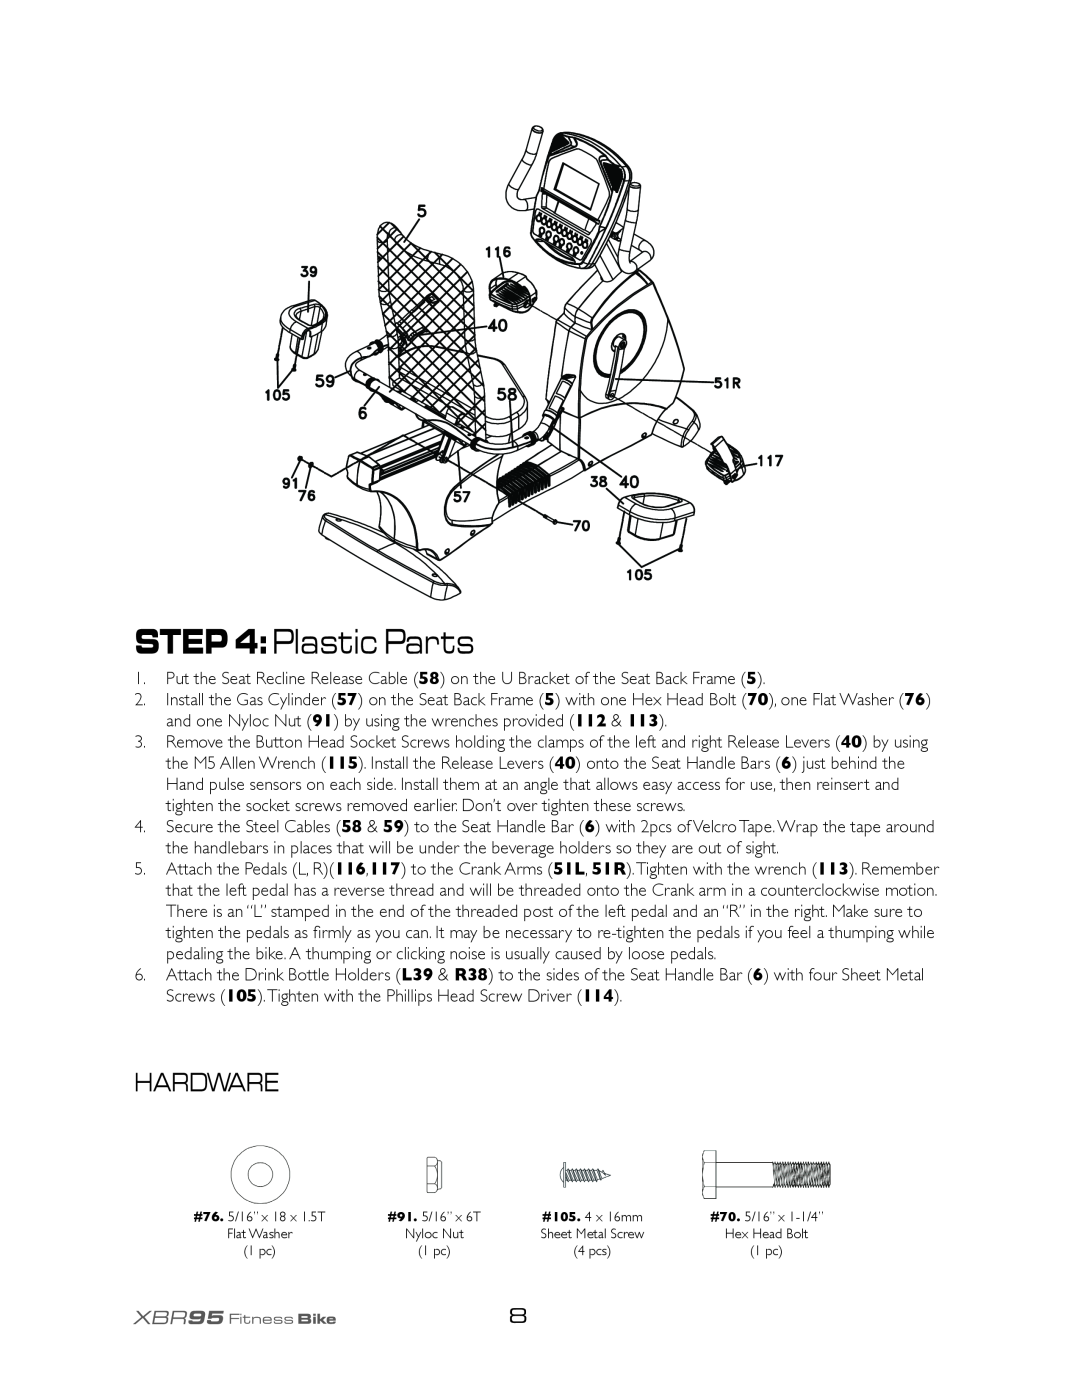 Spirit XBR95 owner manual Plastic Parts, Hardware, #105. 4 x 16mm 